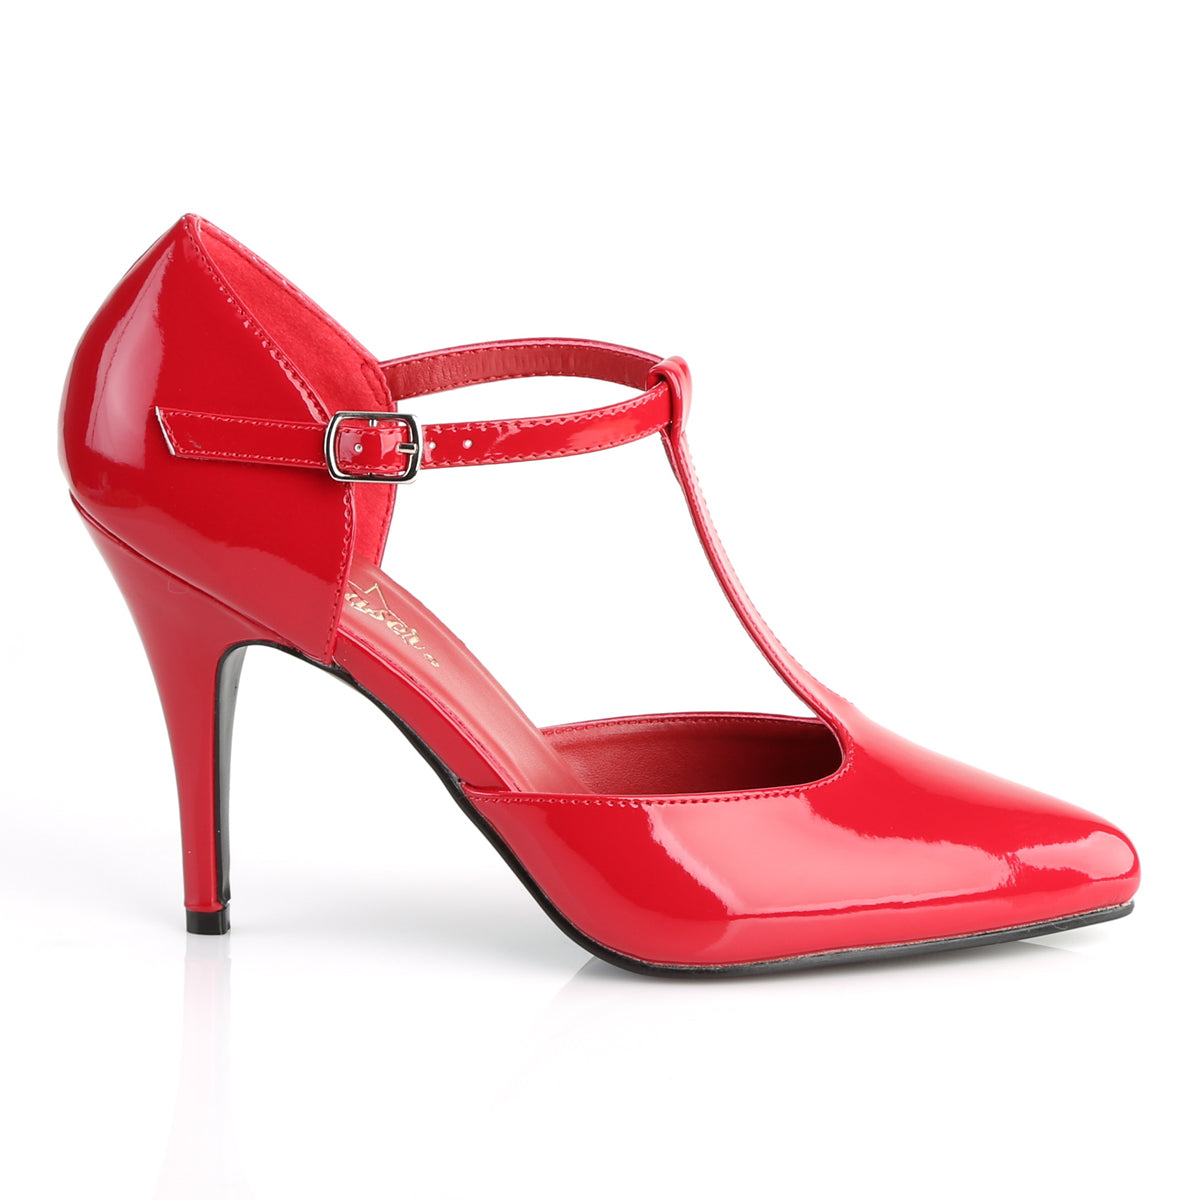 VANITY-415 Pleaser Shoes 4 Inch Heel Red Fetish Footwear-Pleaser- Sexy Shoes Fetish Heels